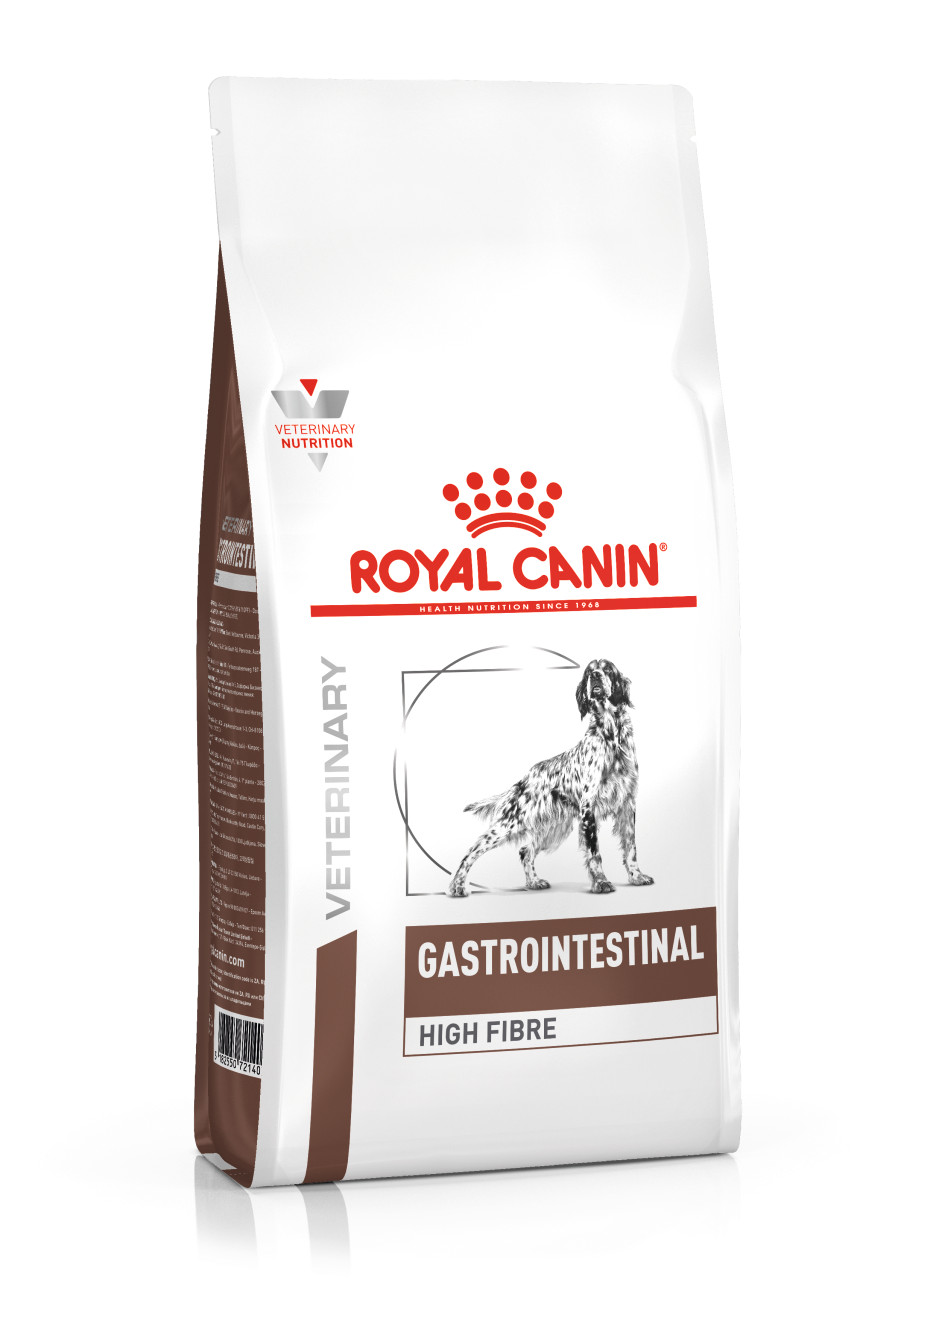 Sloppenwijk Afwijzen Briesje Royal Canin Veterinary Diet Gastrointestinal High Fibre hondenvoer